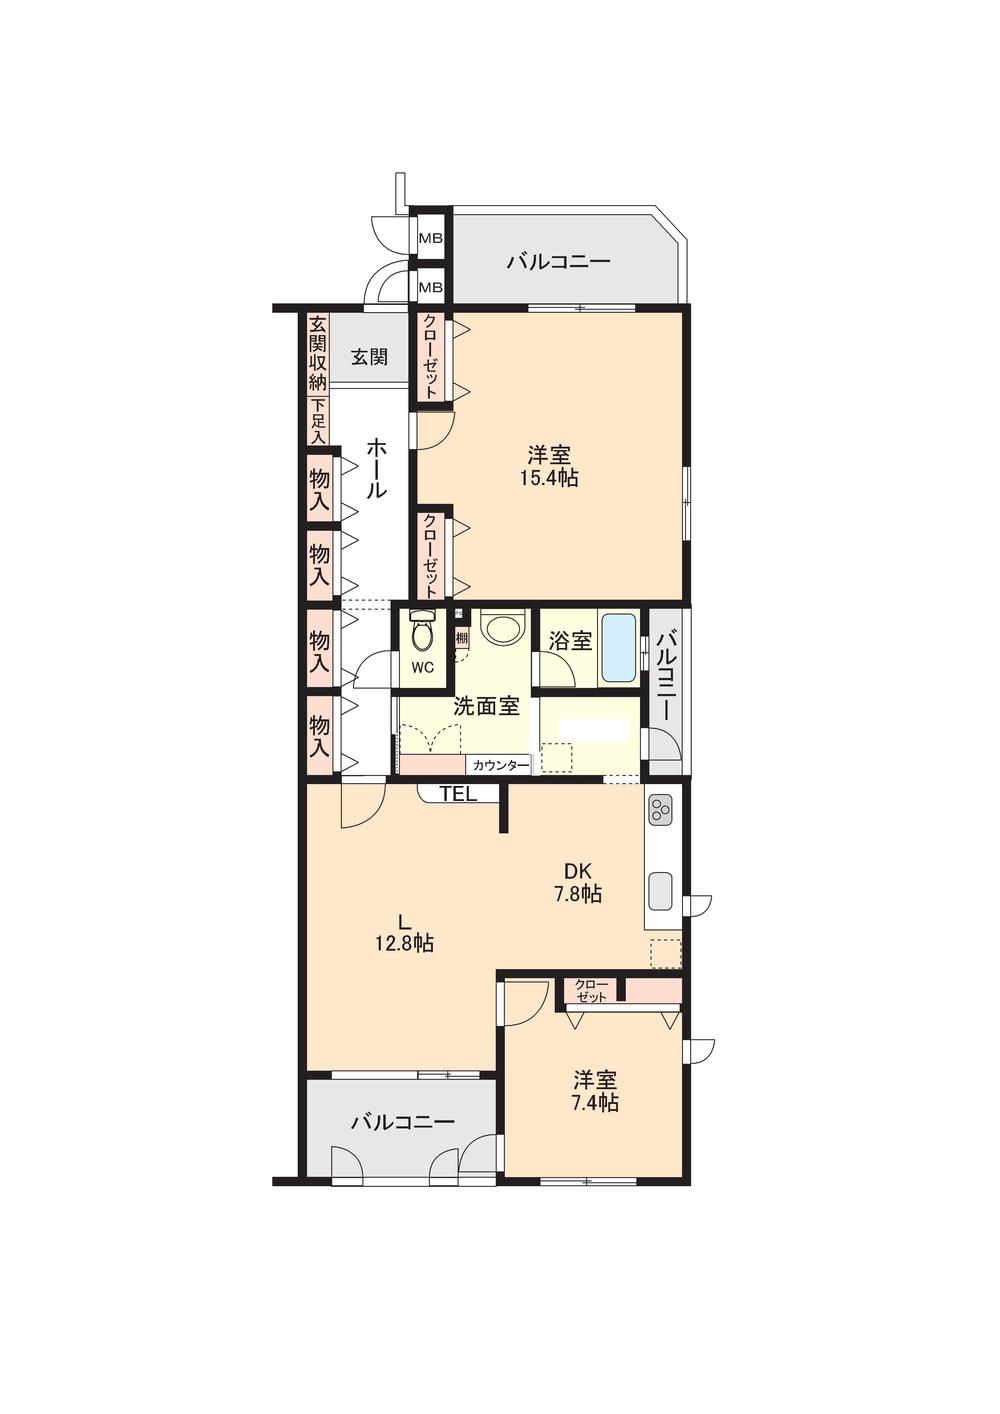 Floor plan. 2LDK, Price 12.8 million yen, Footprint 106.23 sq m , Balcony area 17.27 sq m